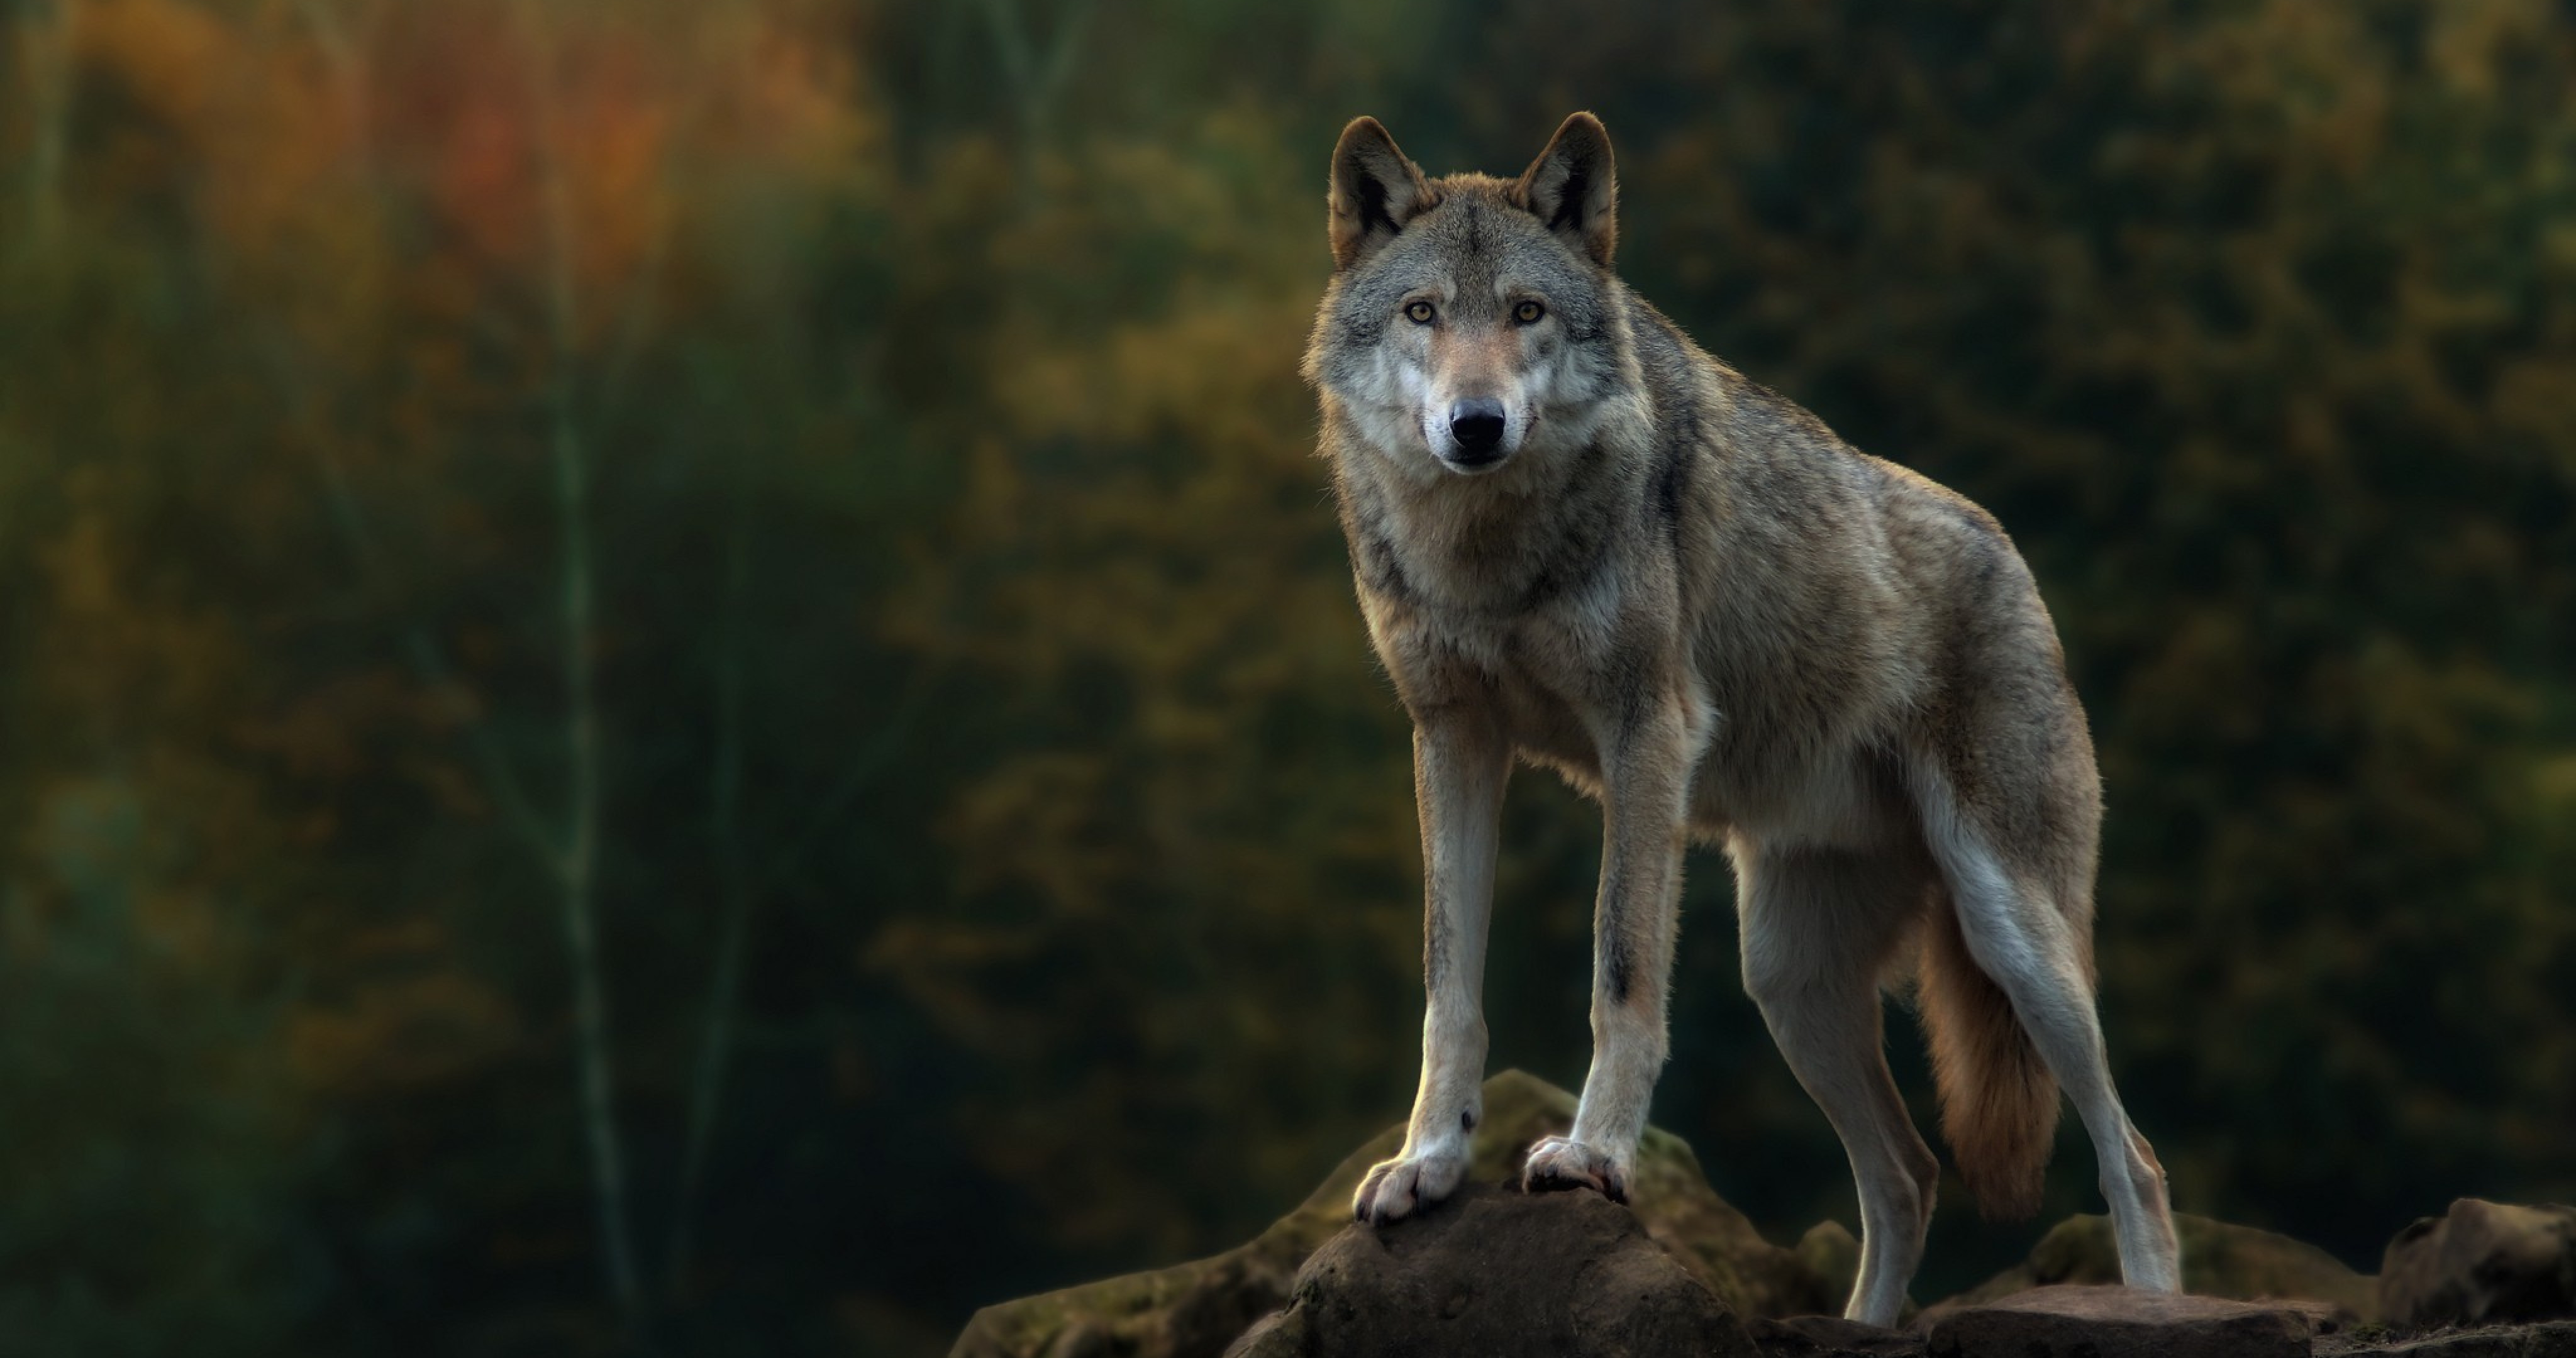 Wolf Fantasy Art 4K wallpaper download